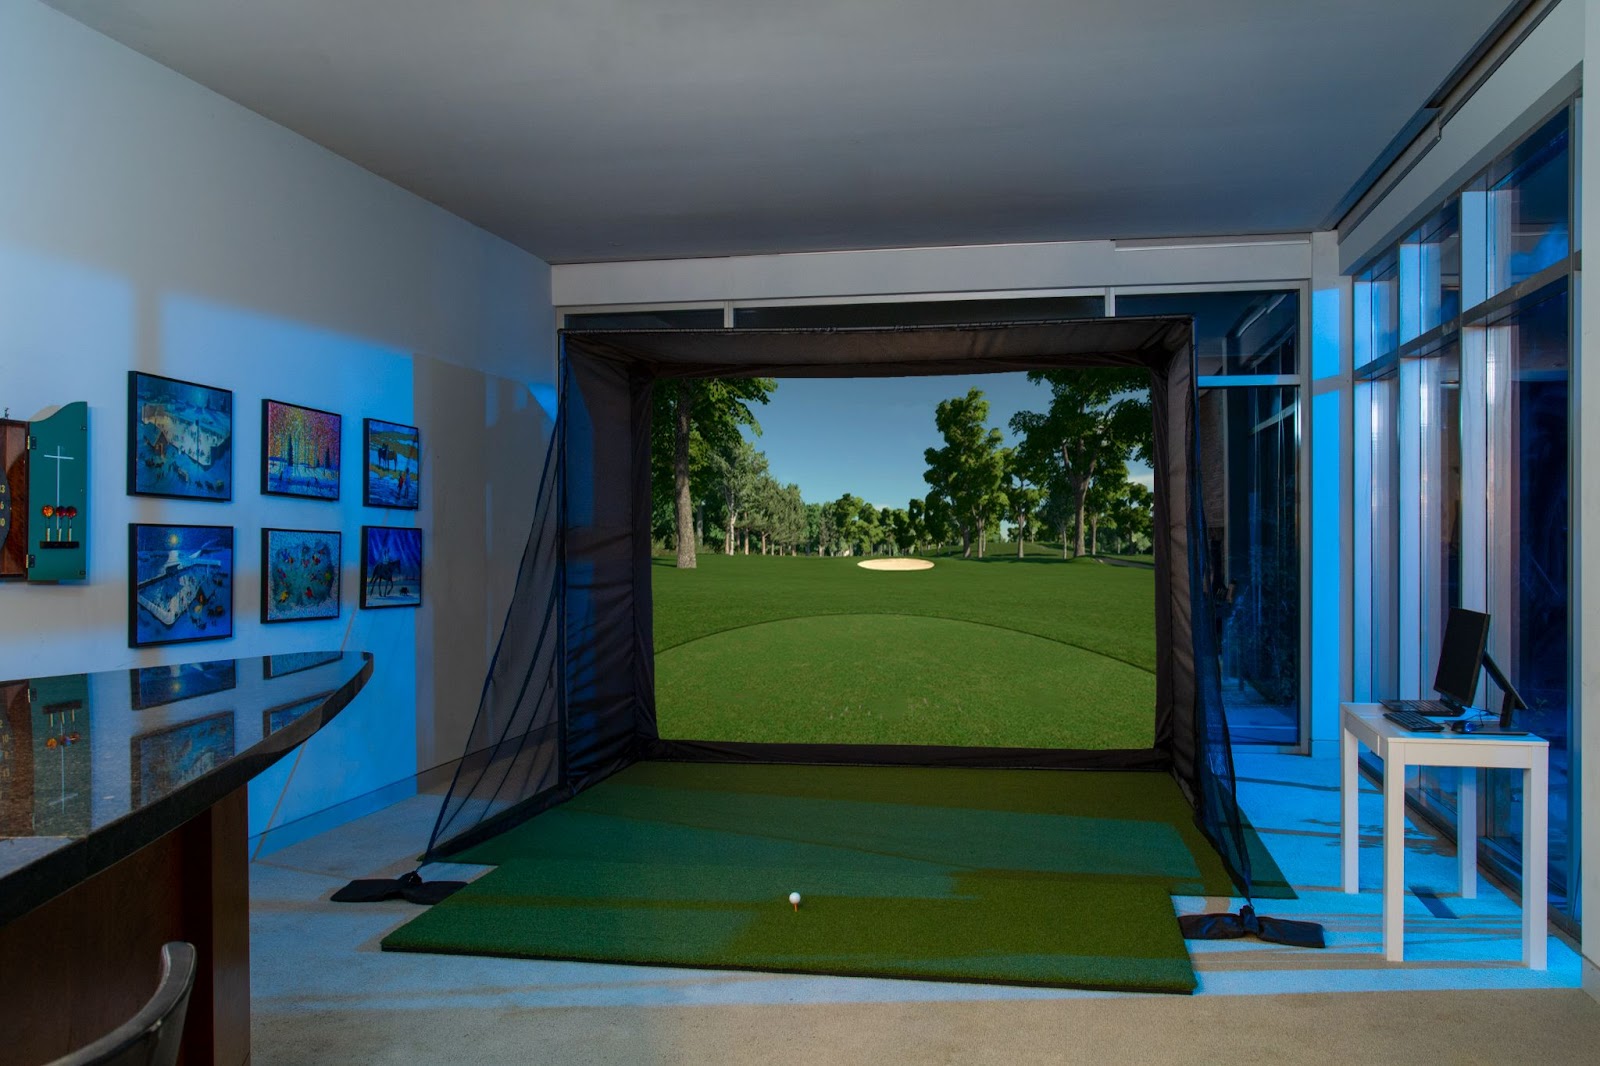 Unfinished basement ideas - include a Golf simulator